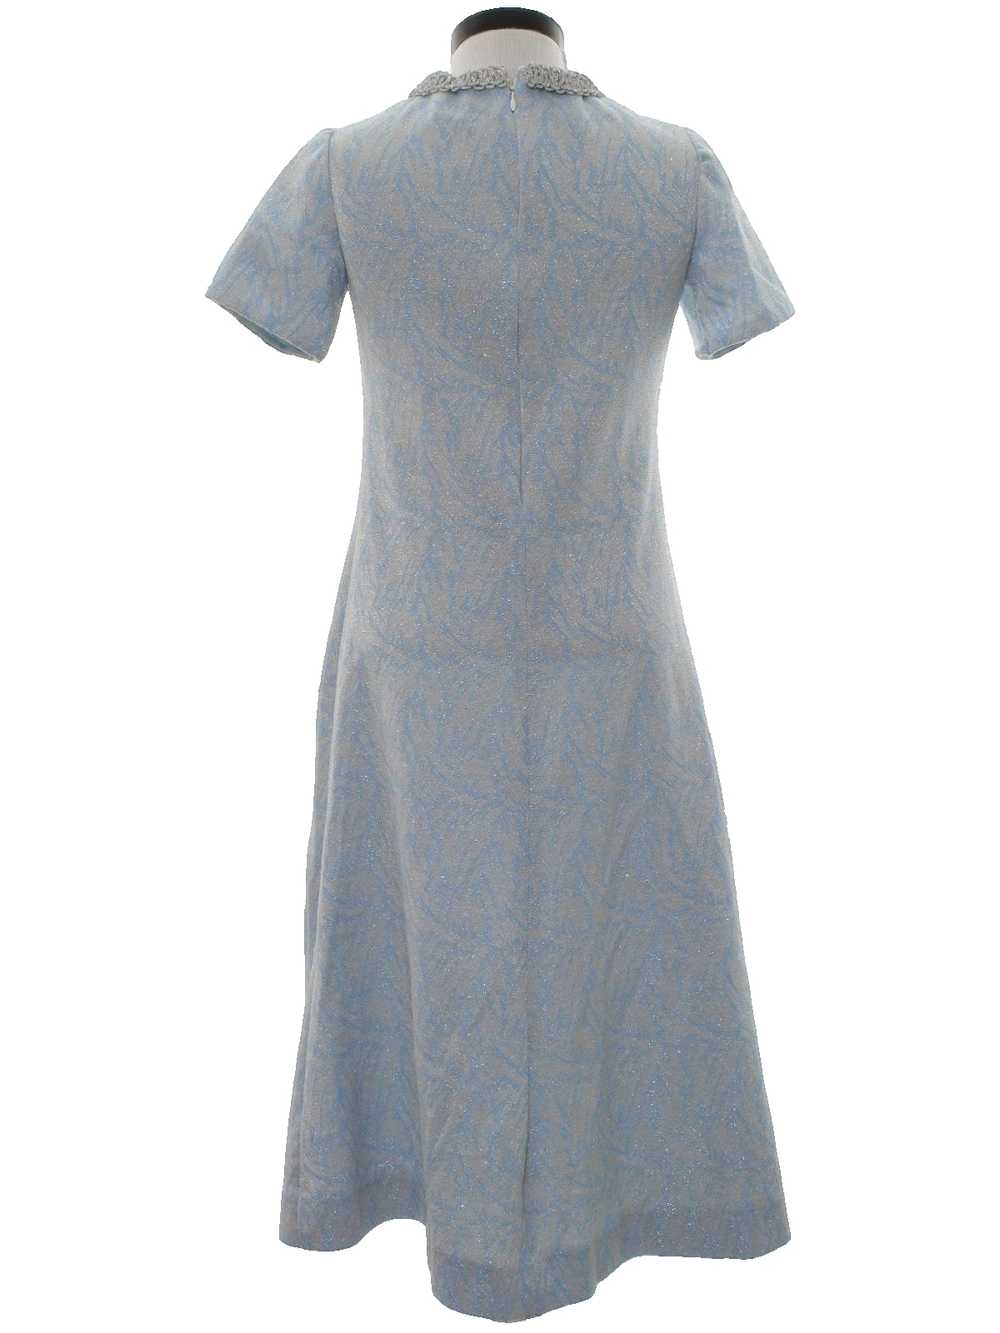 1960's Mod Knit Cocktail Dress - image 3